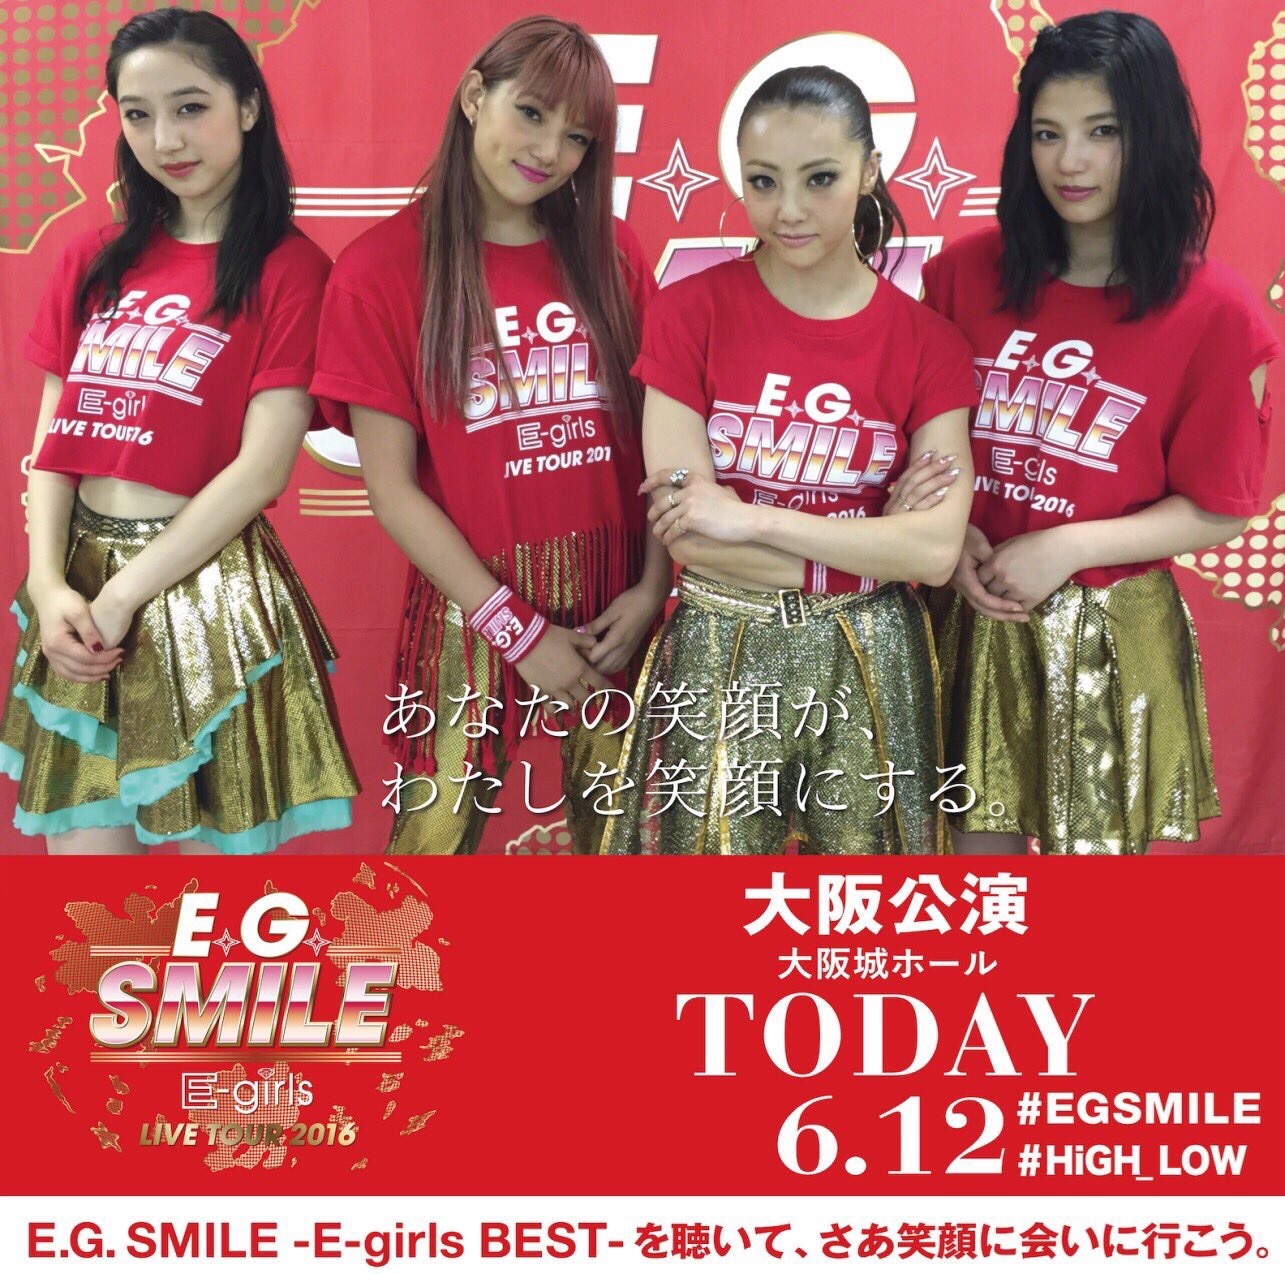 E.G.SMILE-E-girls BEST- デポー - 邦楽